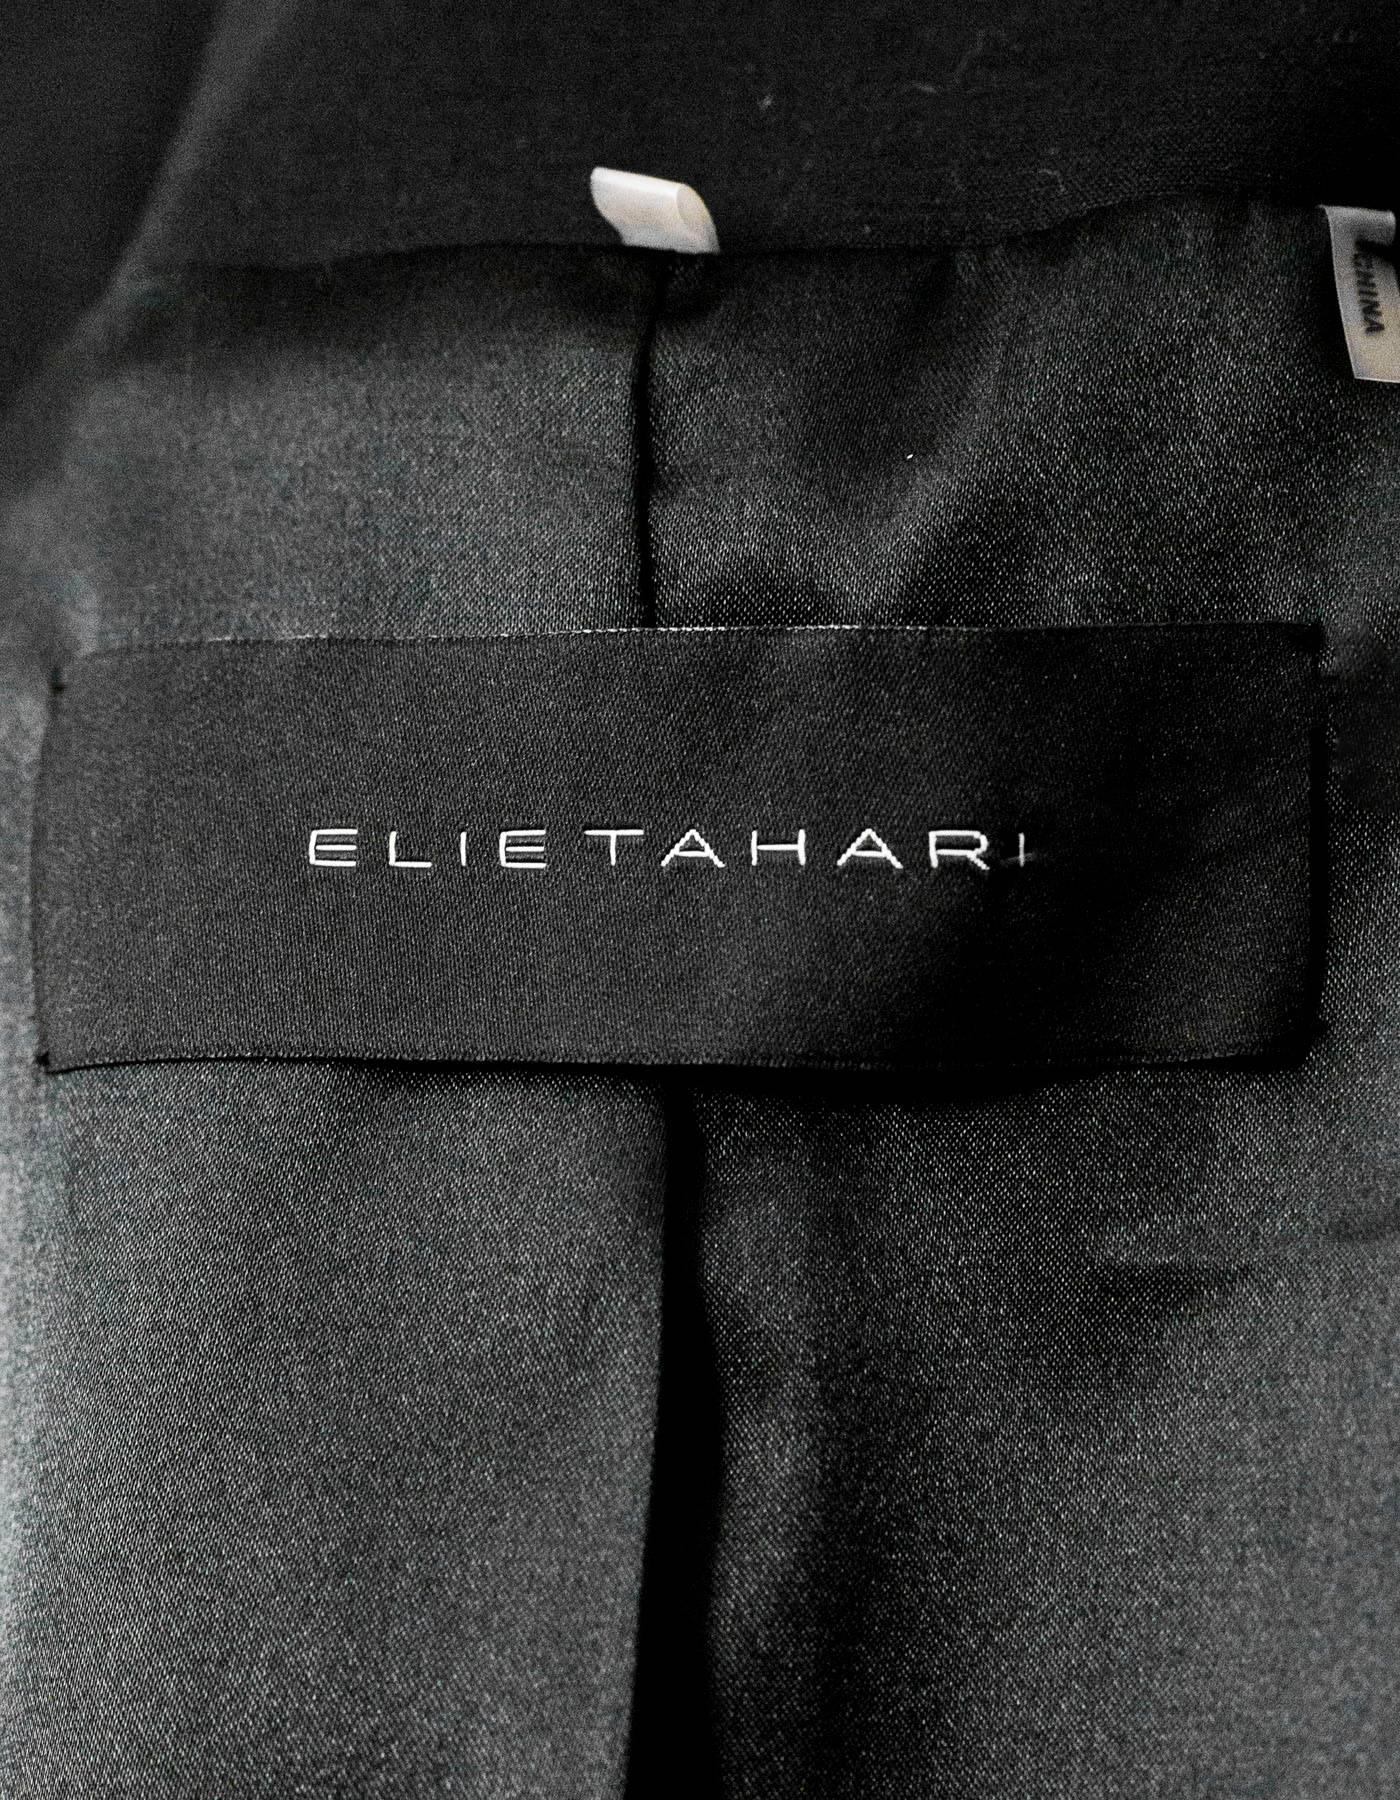 Elie Tahari Black Evening Jacket sz M 2